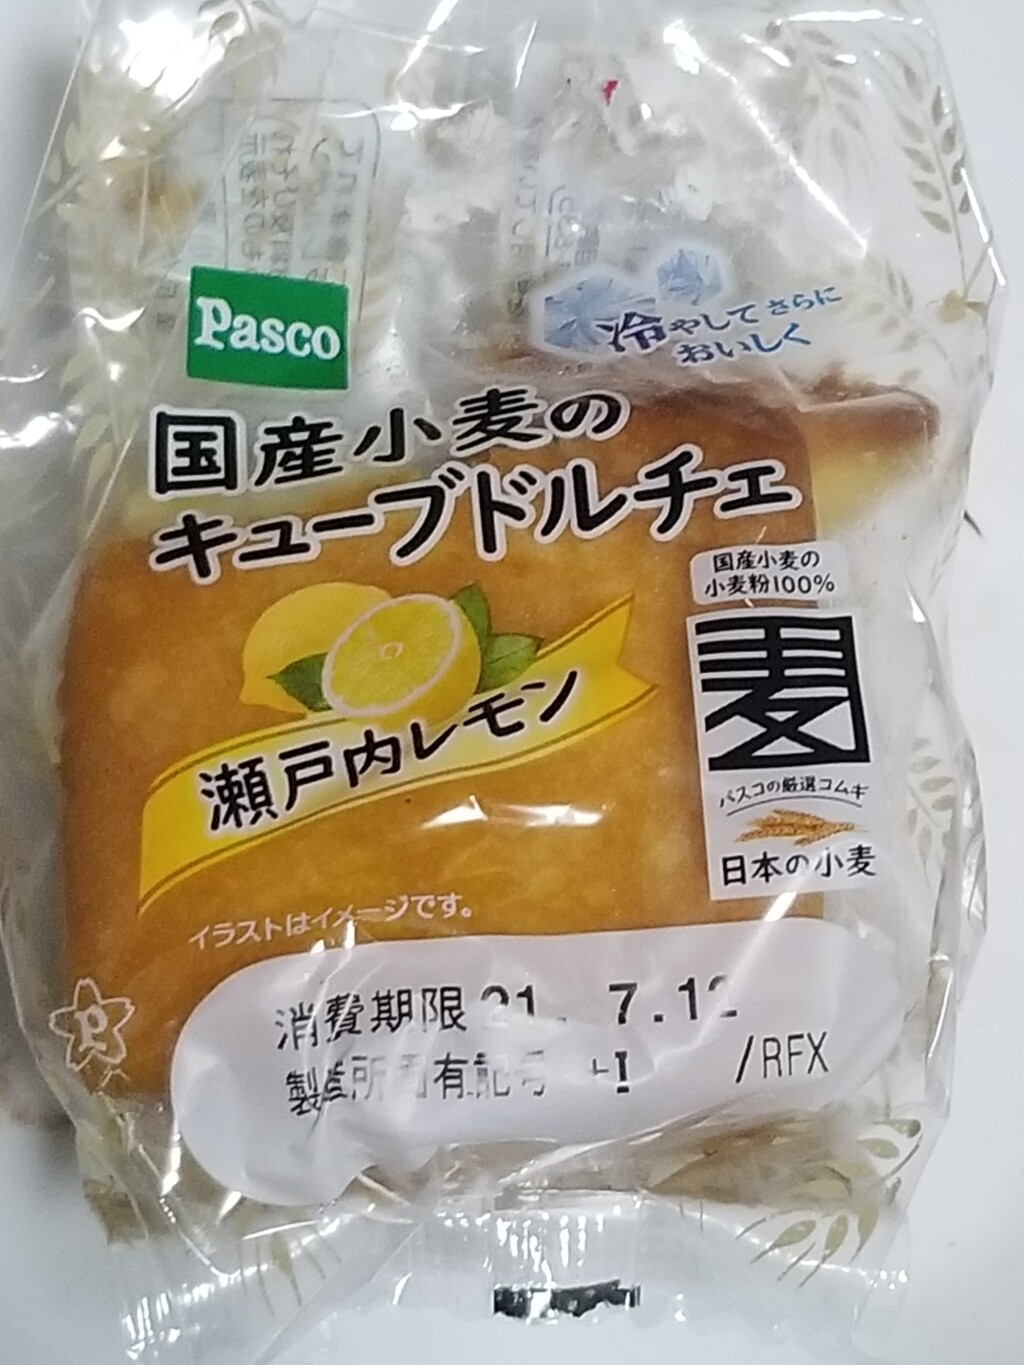 Pasco国産小麦のキューブドルチェ 瀬戸内レモン